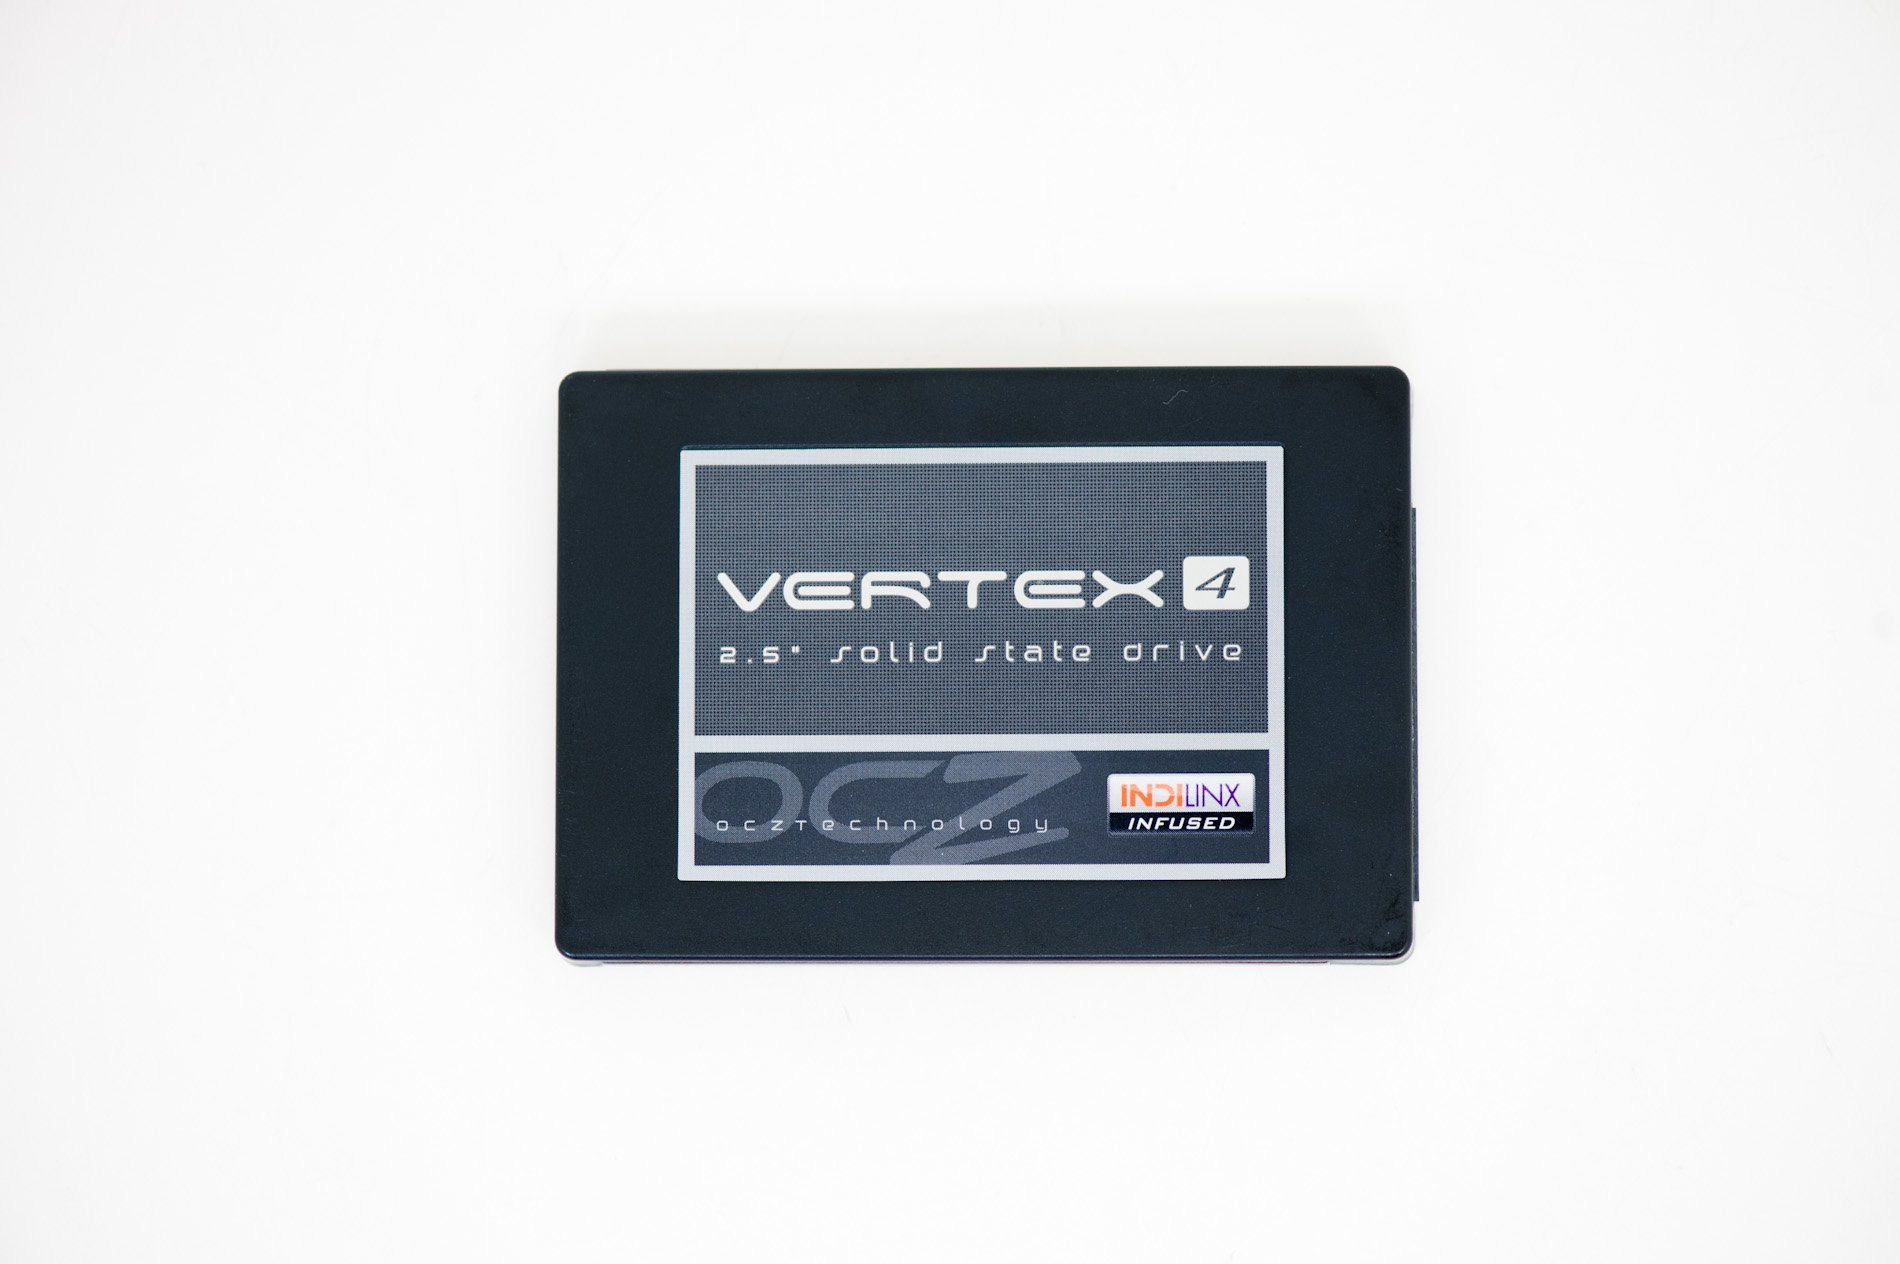 Vertex 4 Review 512